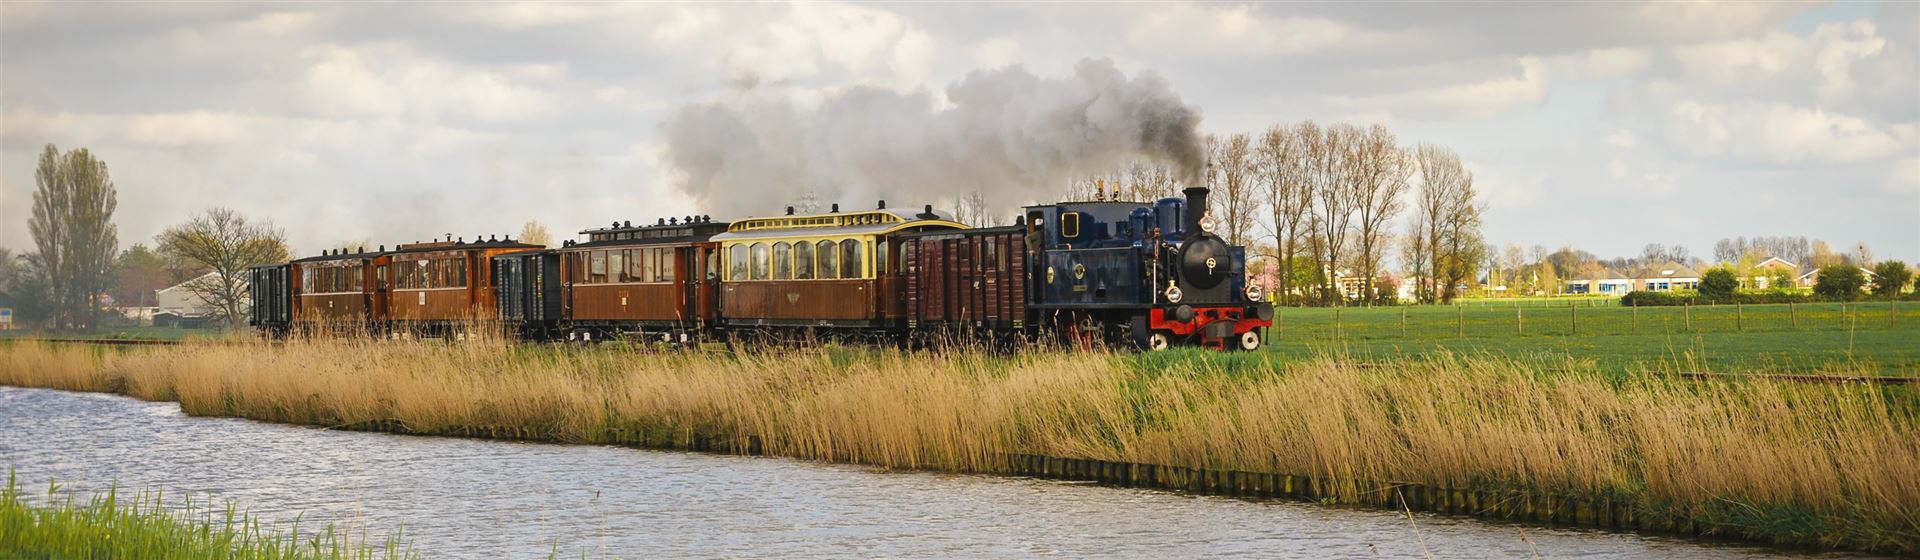 <img src="steamtrainatmedemblik1©shutterstock.jpeg"  alt="Steam Train at Medemblik" />